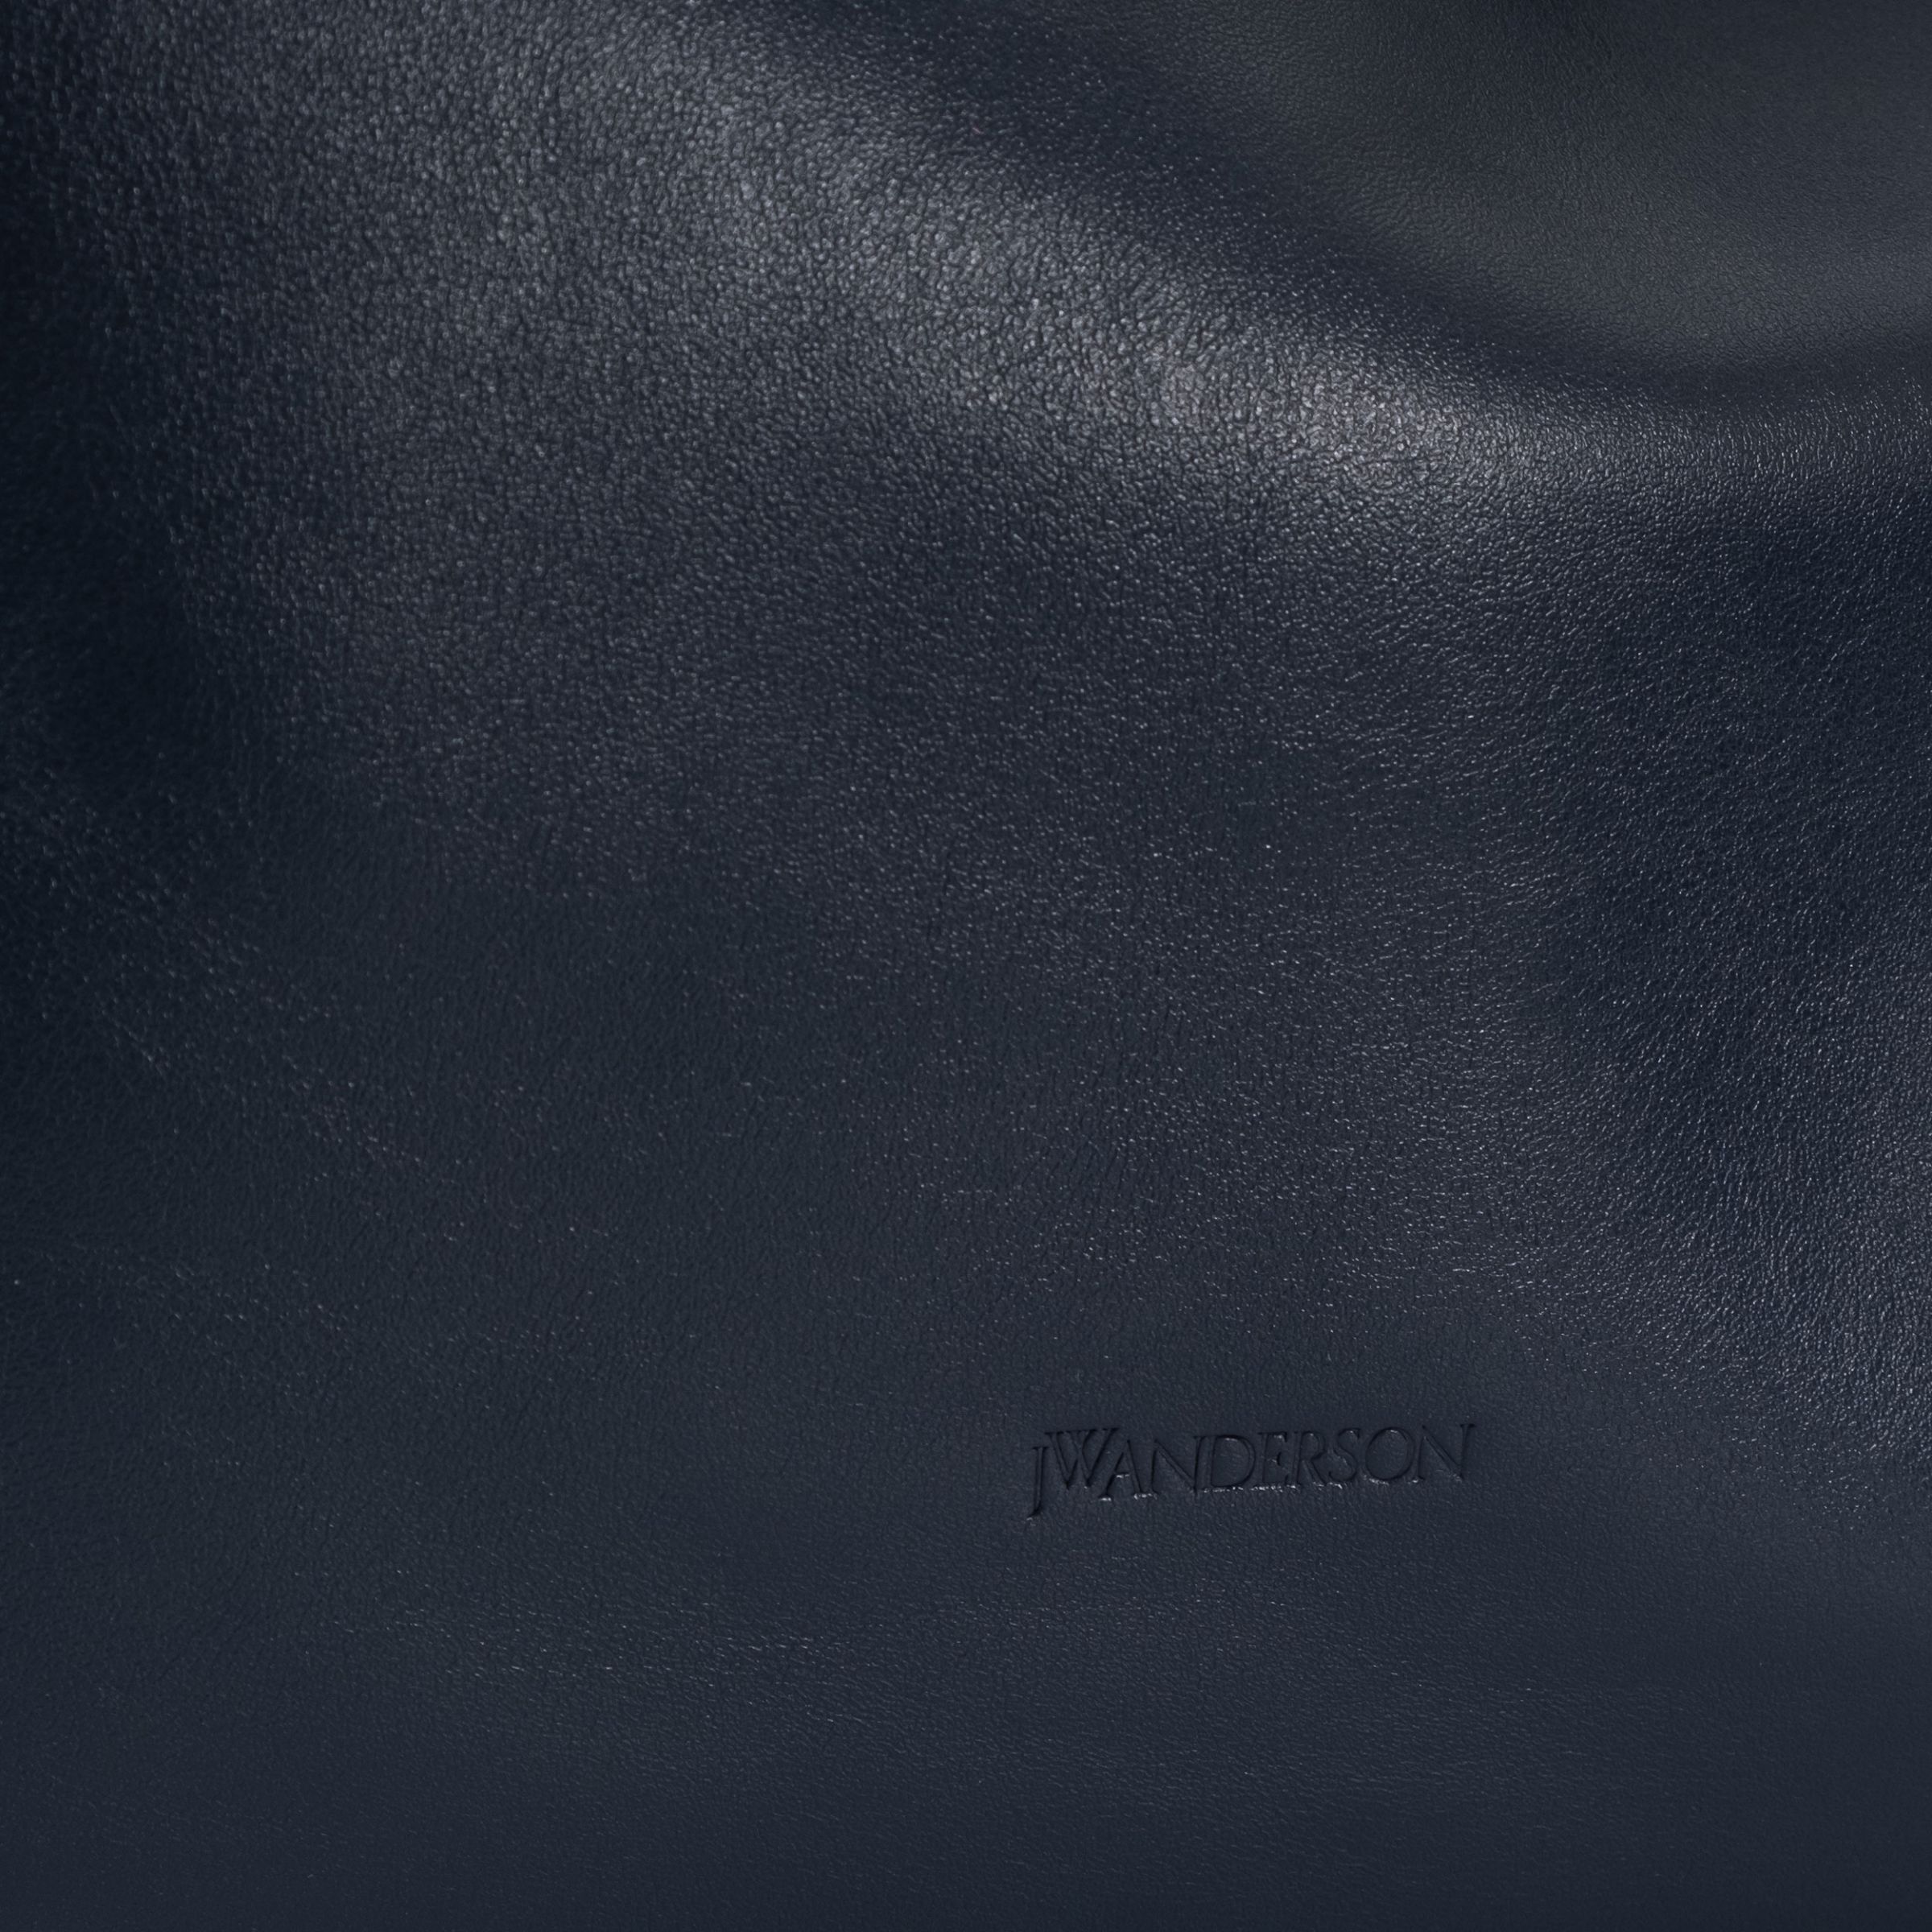 Сумка J.W.Anderson Small Chain темно-синяя